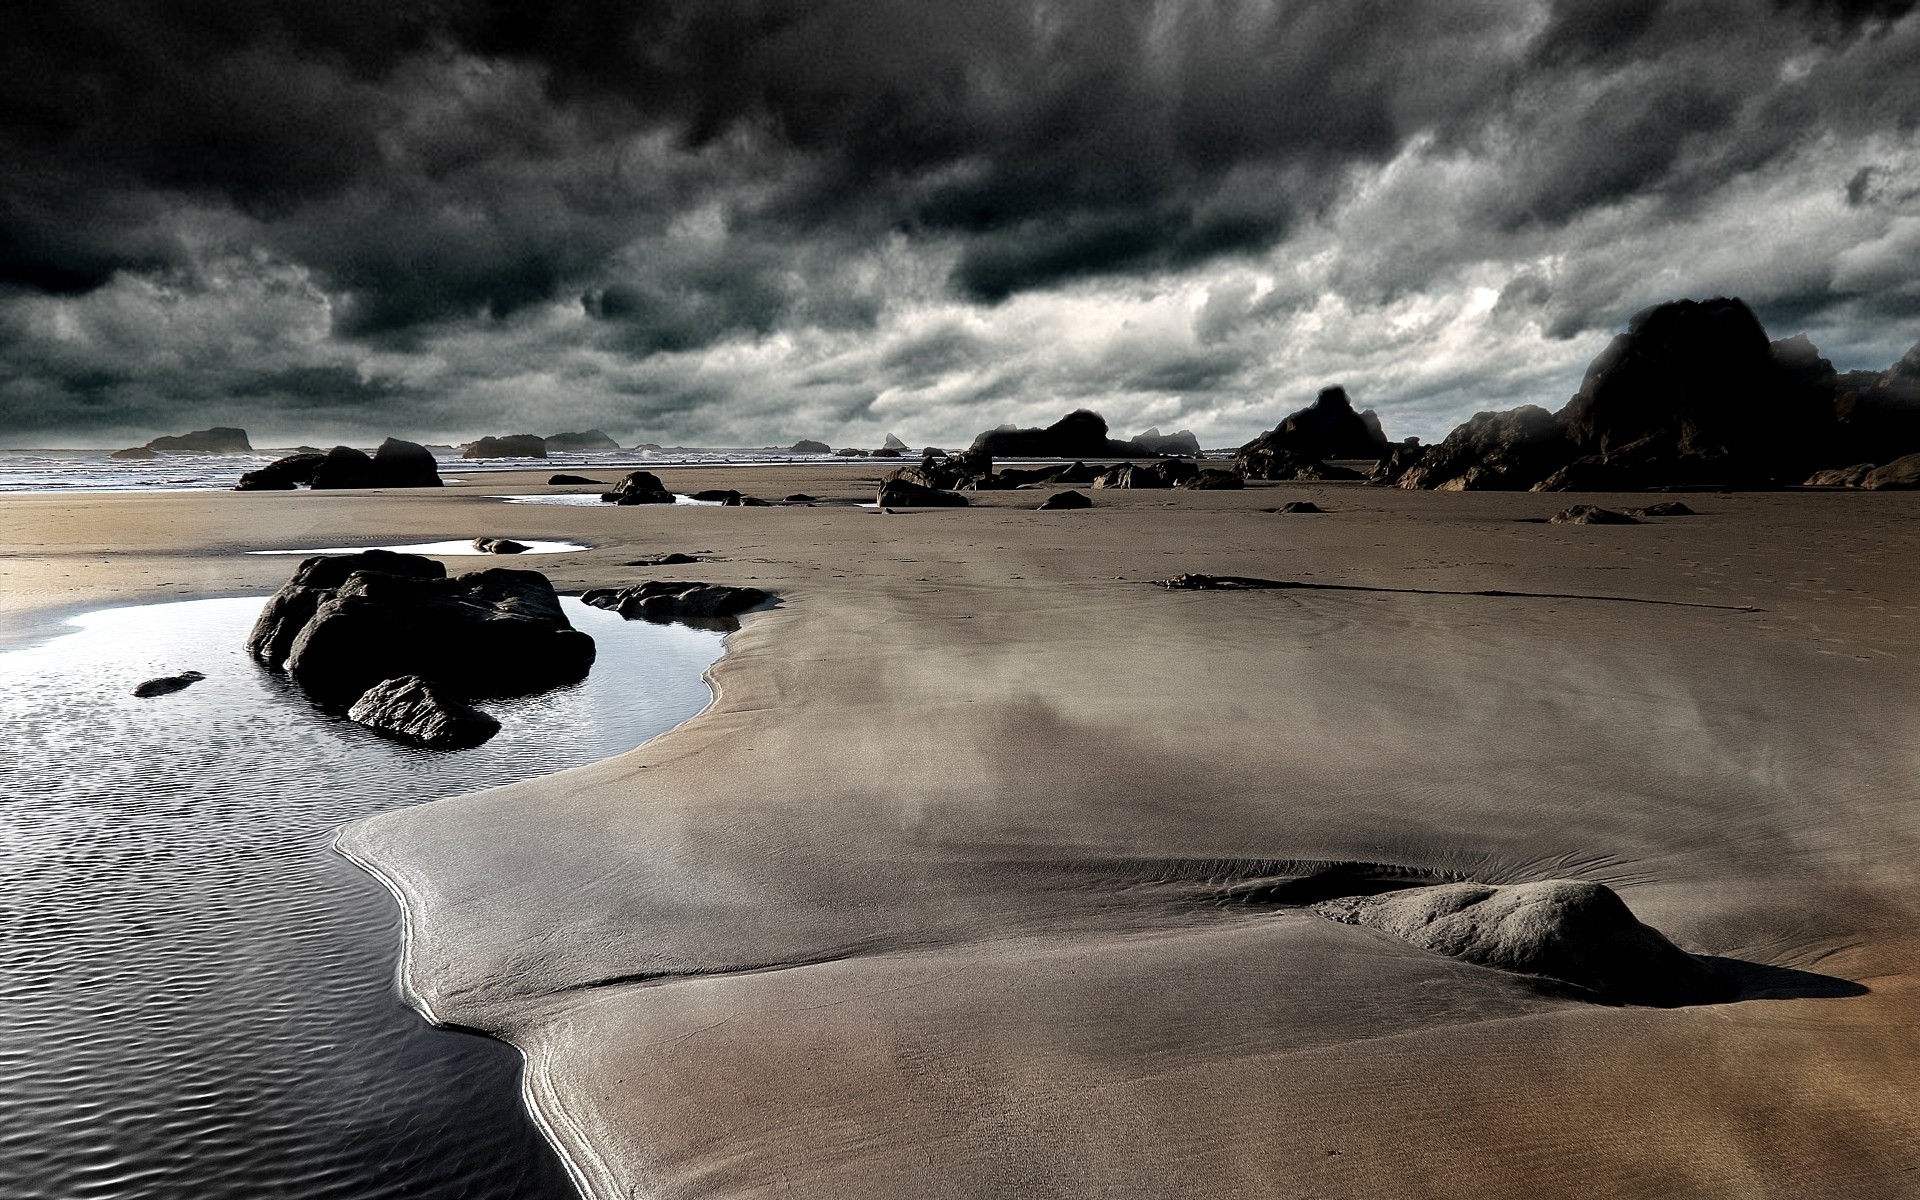 General 1920x1200 beach coast clouds stones nature dark depressing surreal gloomy overcast sand storm